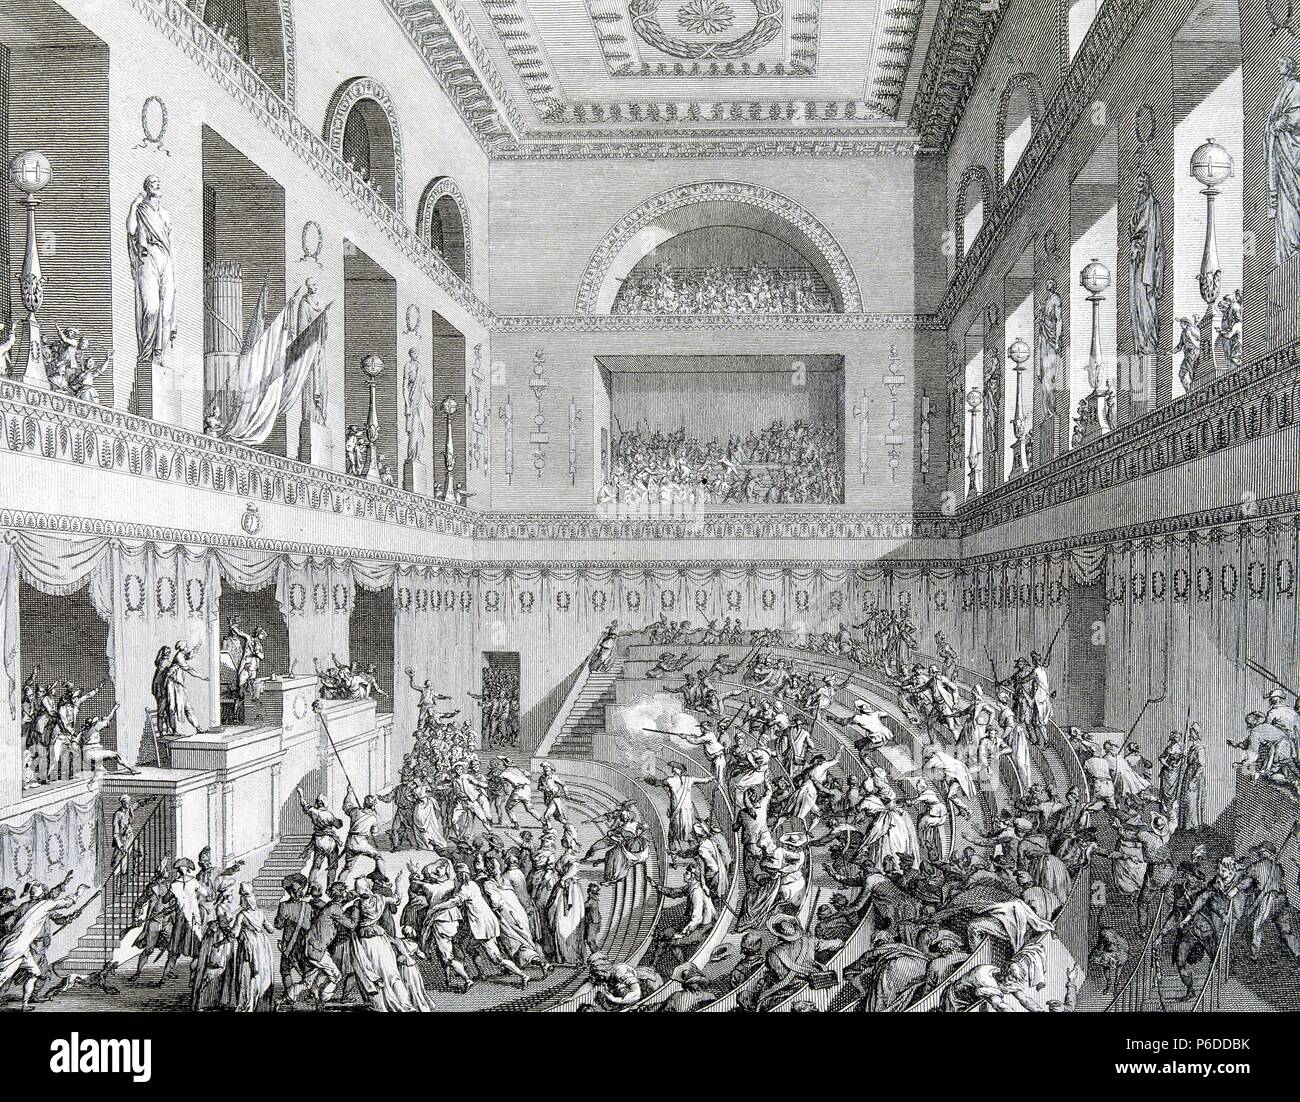 HISTORIA DE FRANCIA. REVOLUCION FRANCESA. 1789 - 1799. ASESINATO DE FERRAUD DANS. Stock Photo